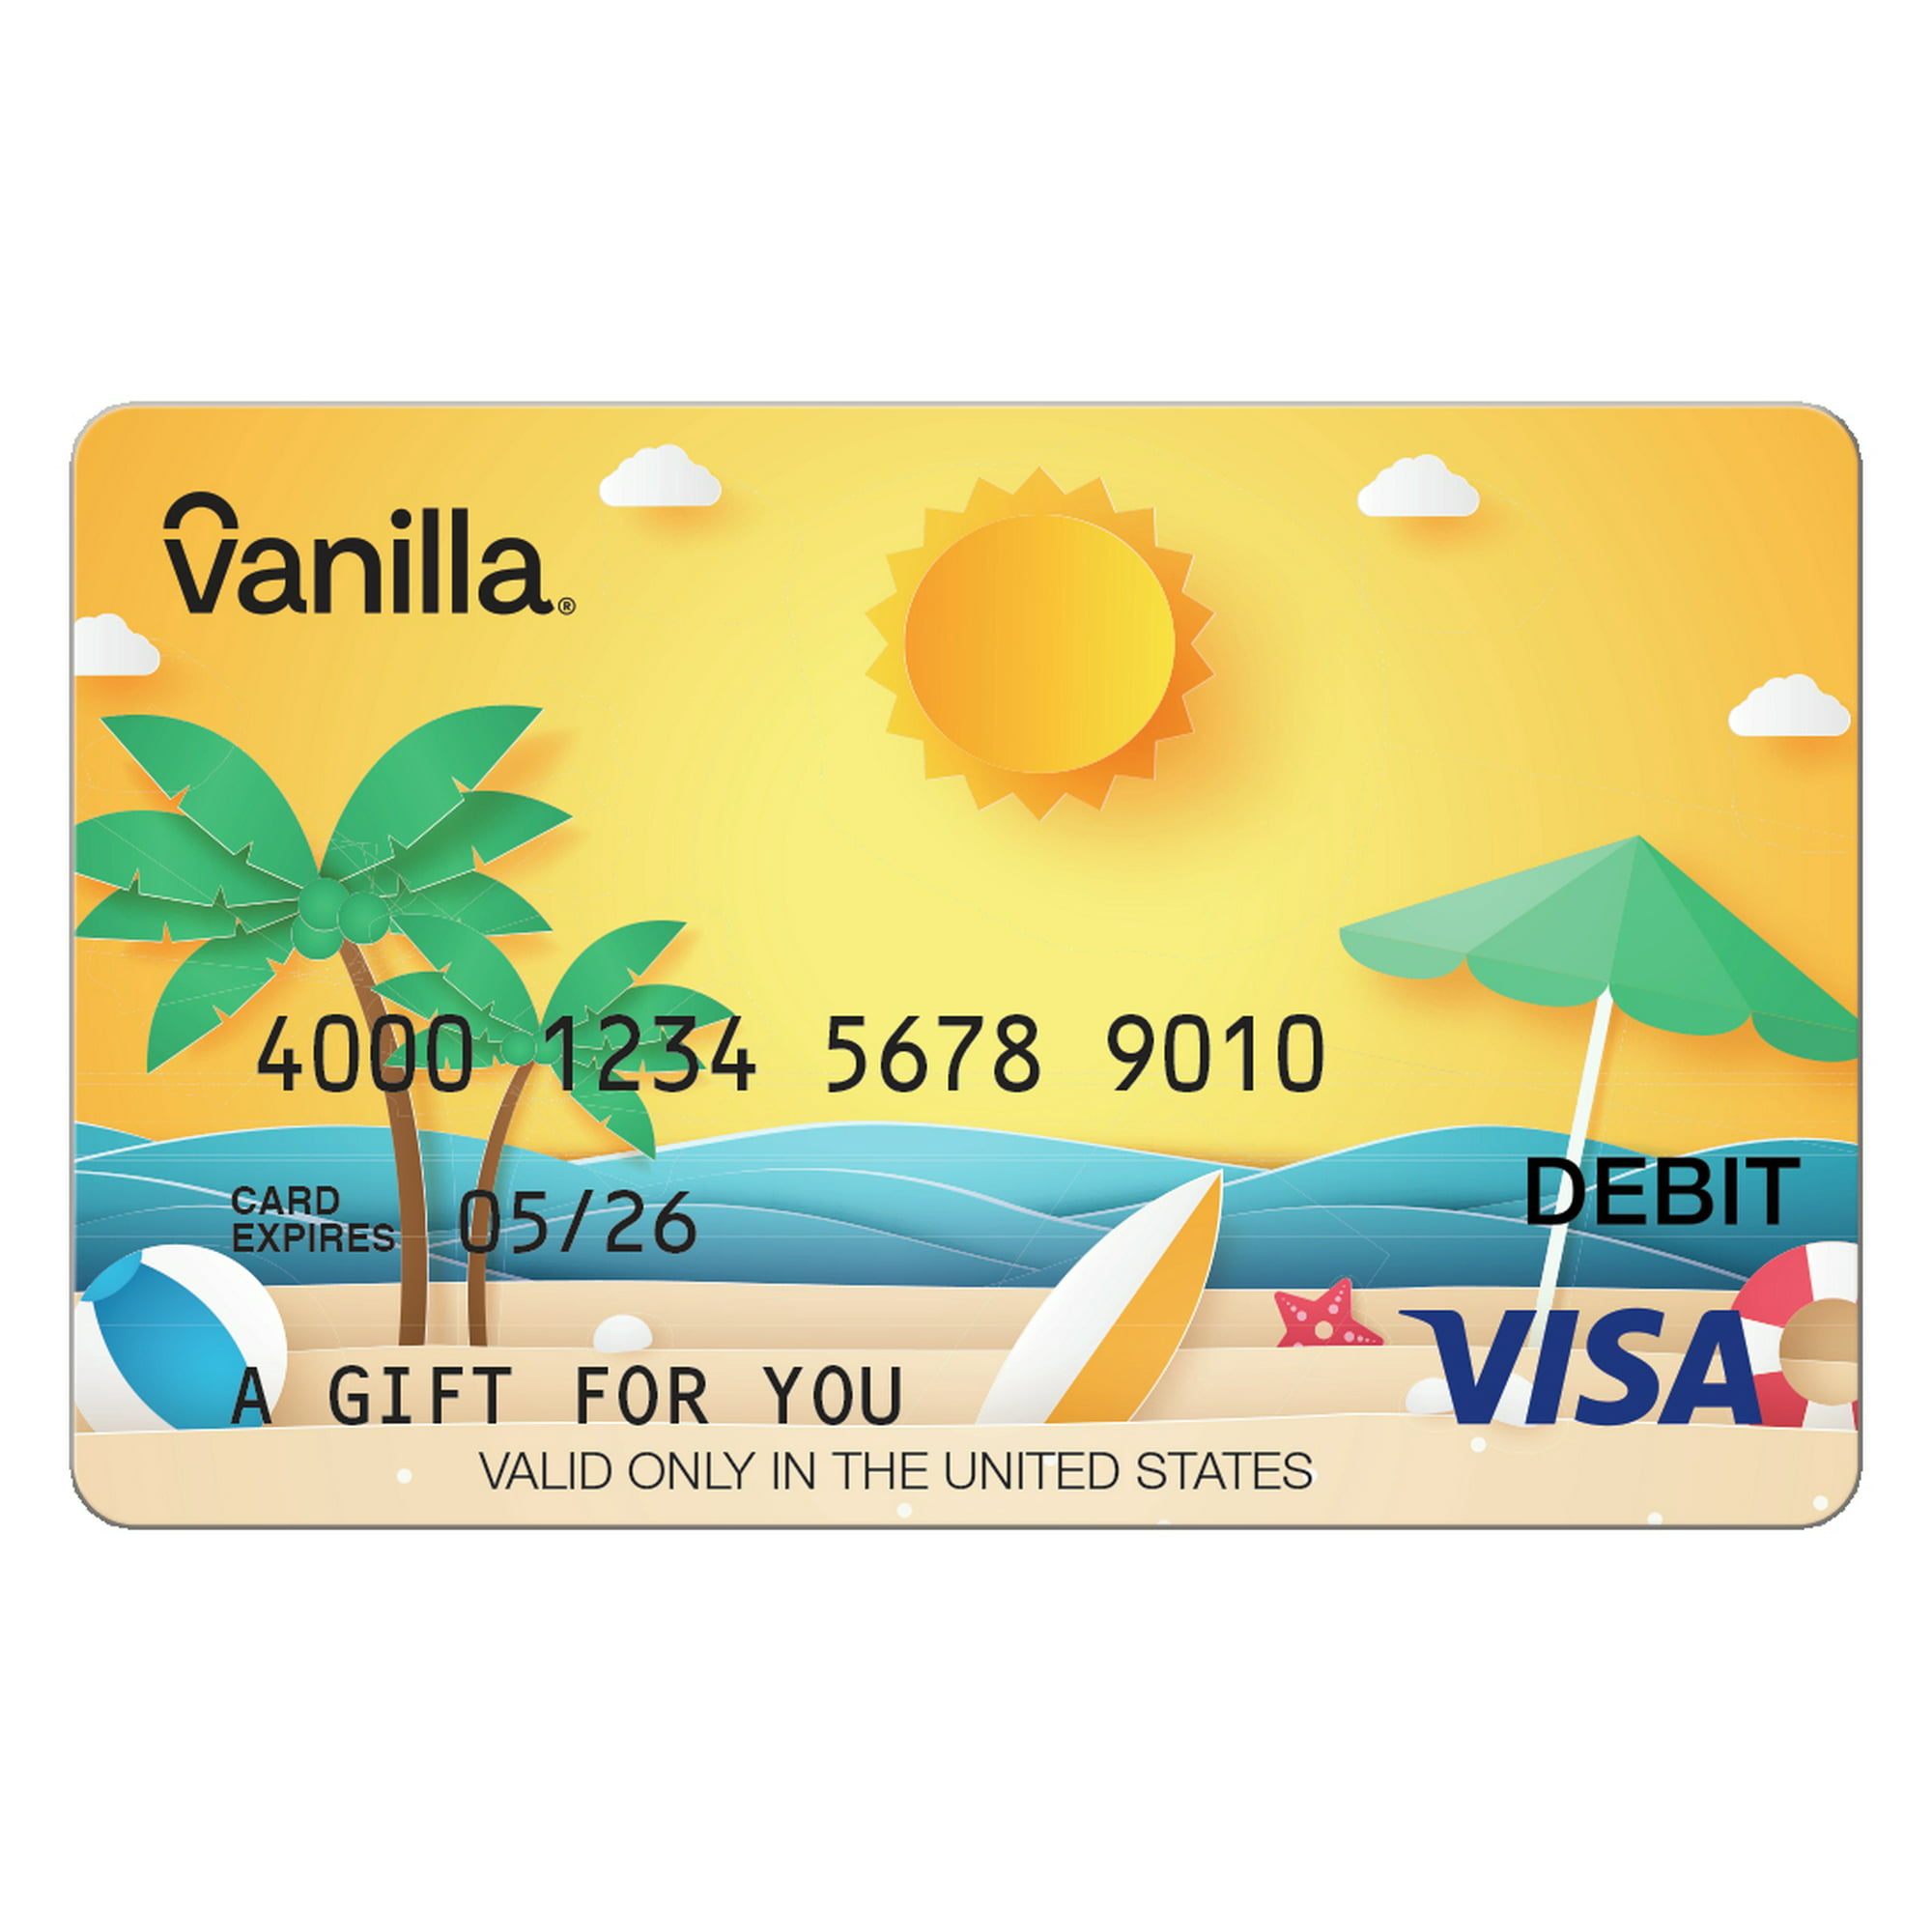 $200 visa gift card